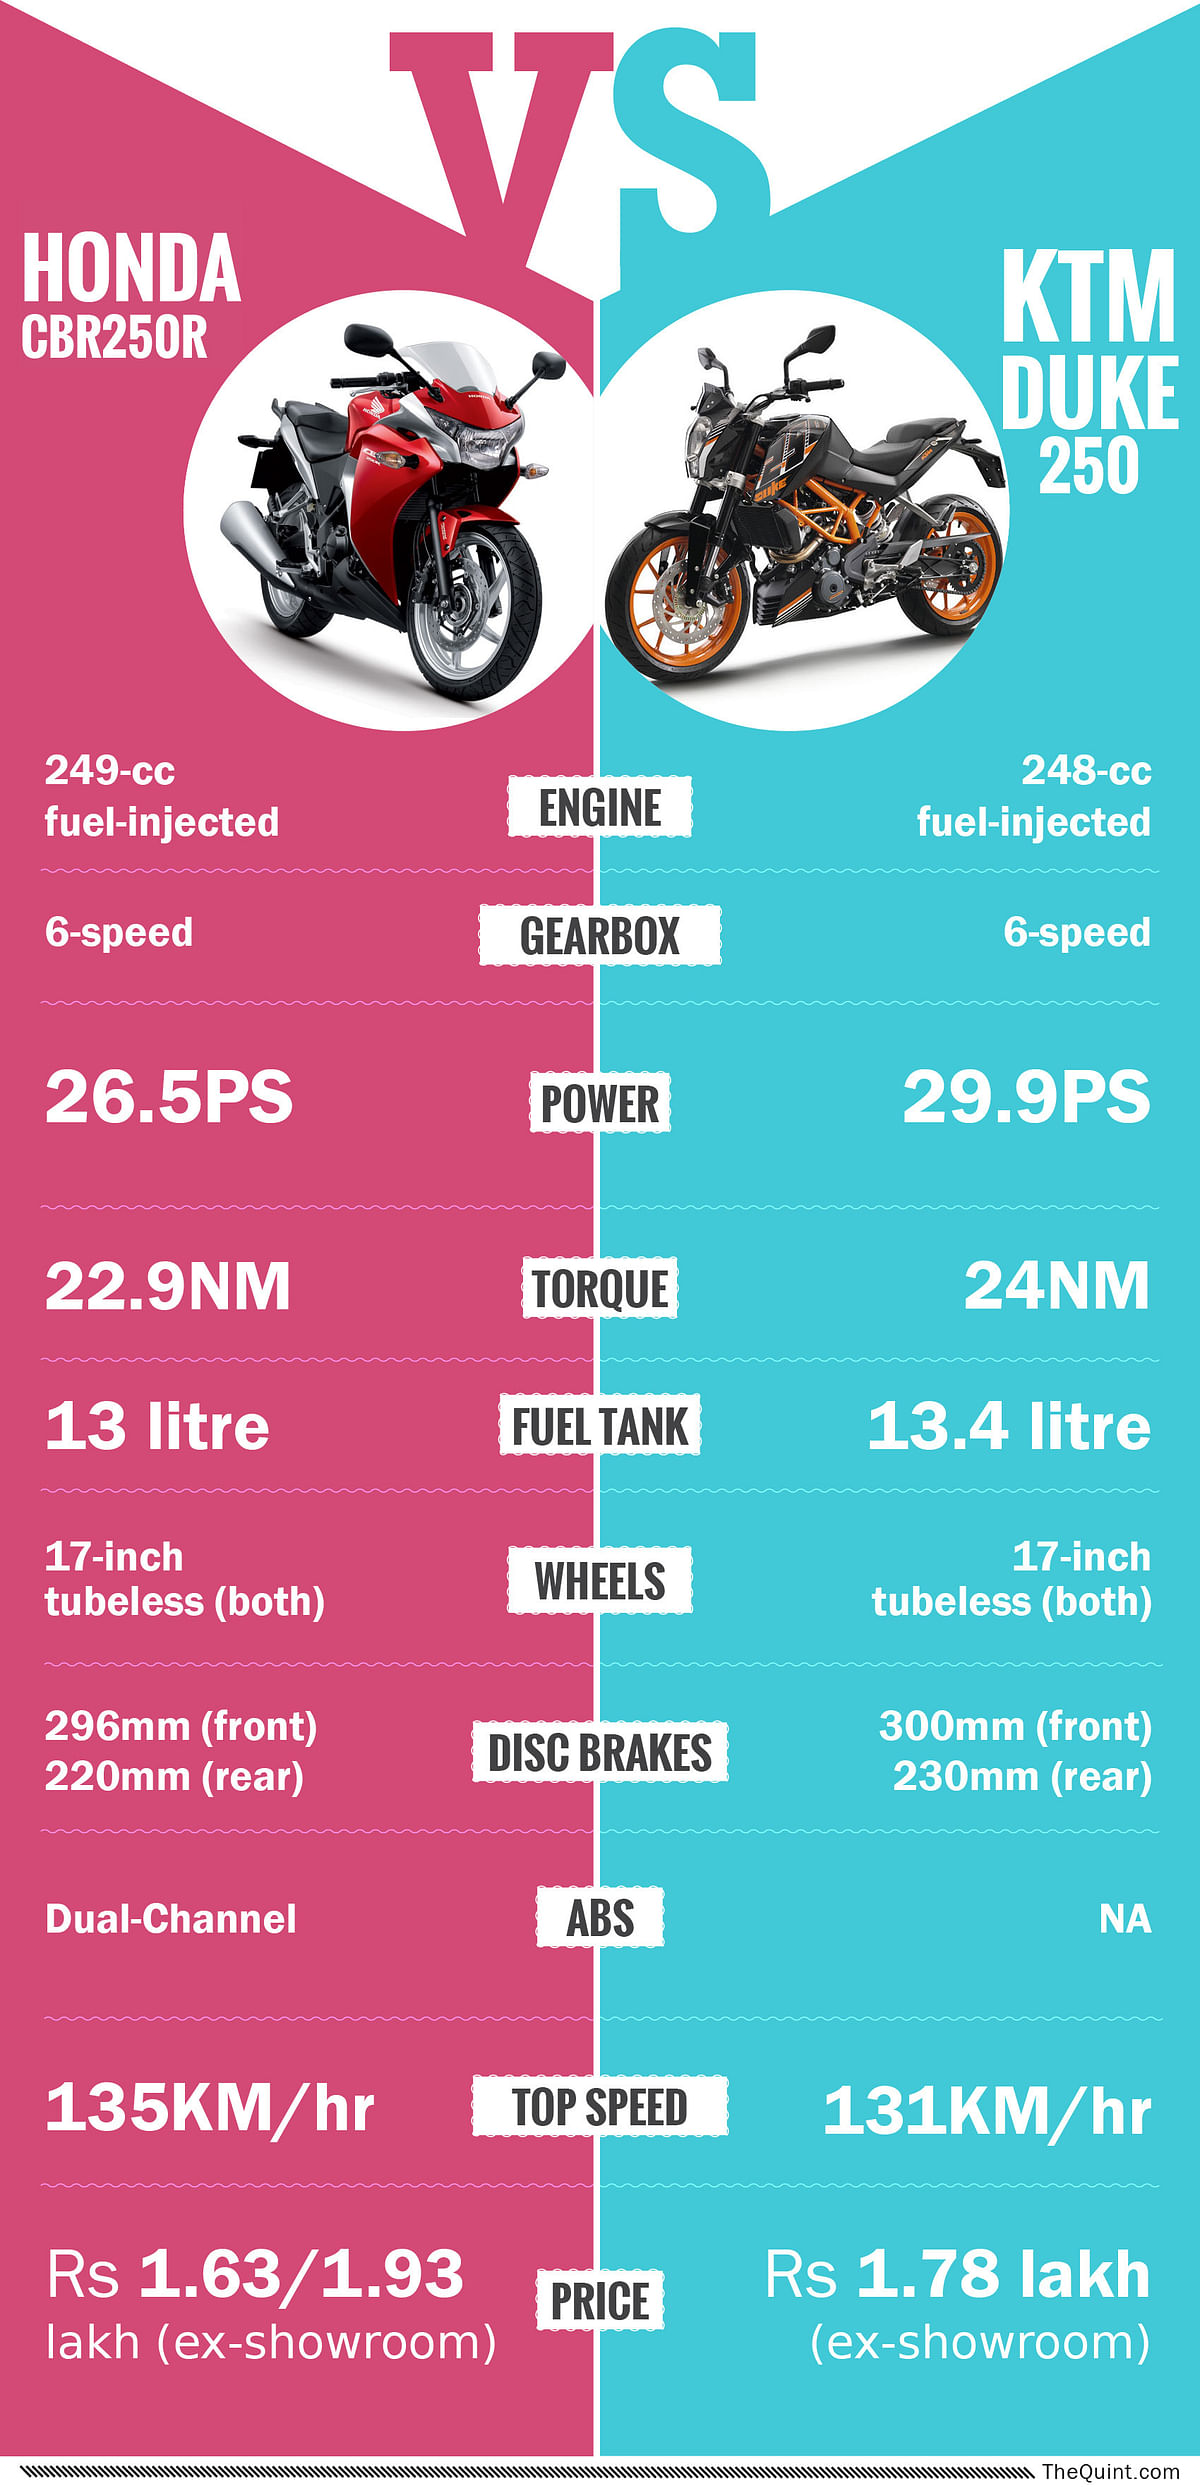 We compare the latest 250cc bikes – Honda CBR250R and the KTM Duke 250. 